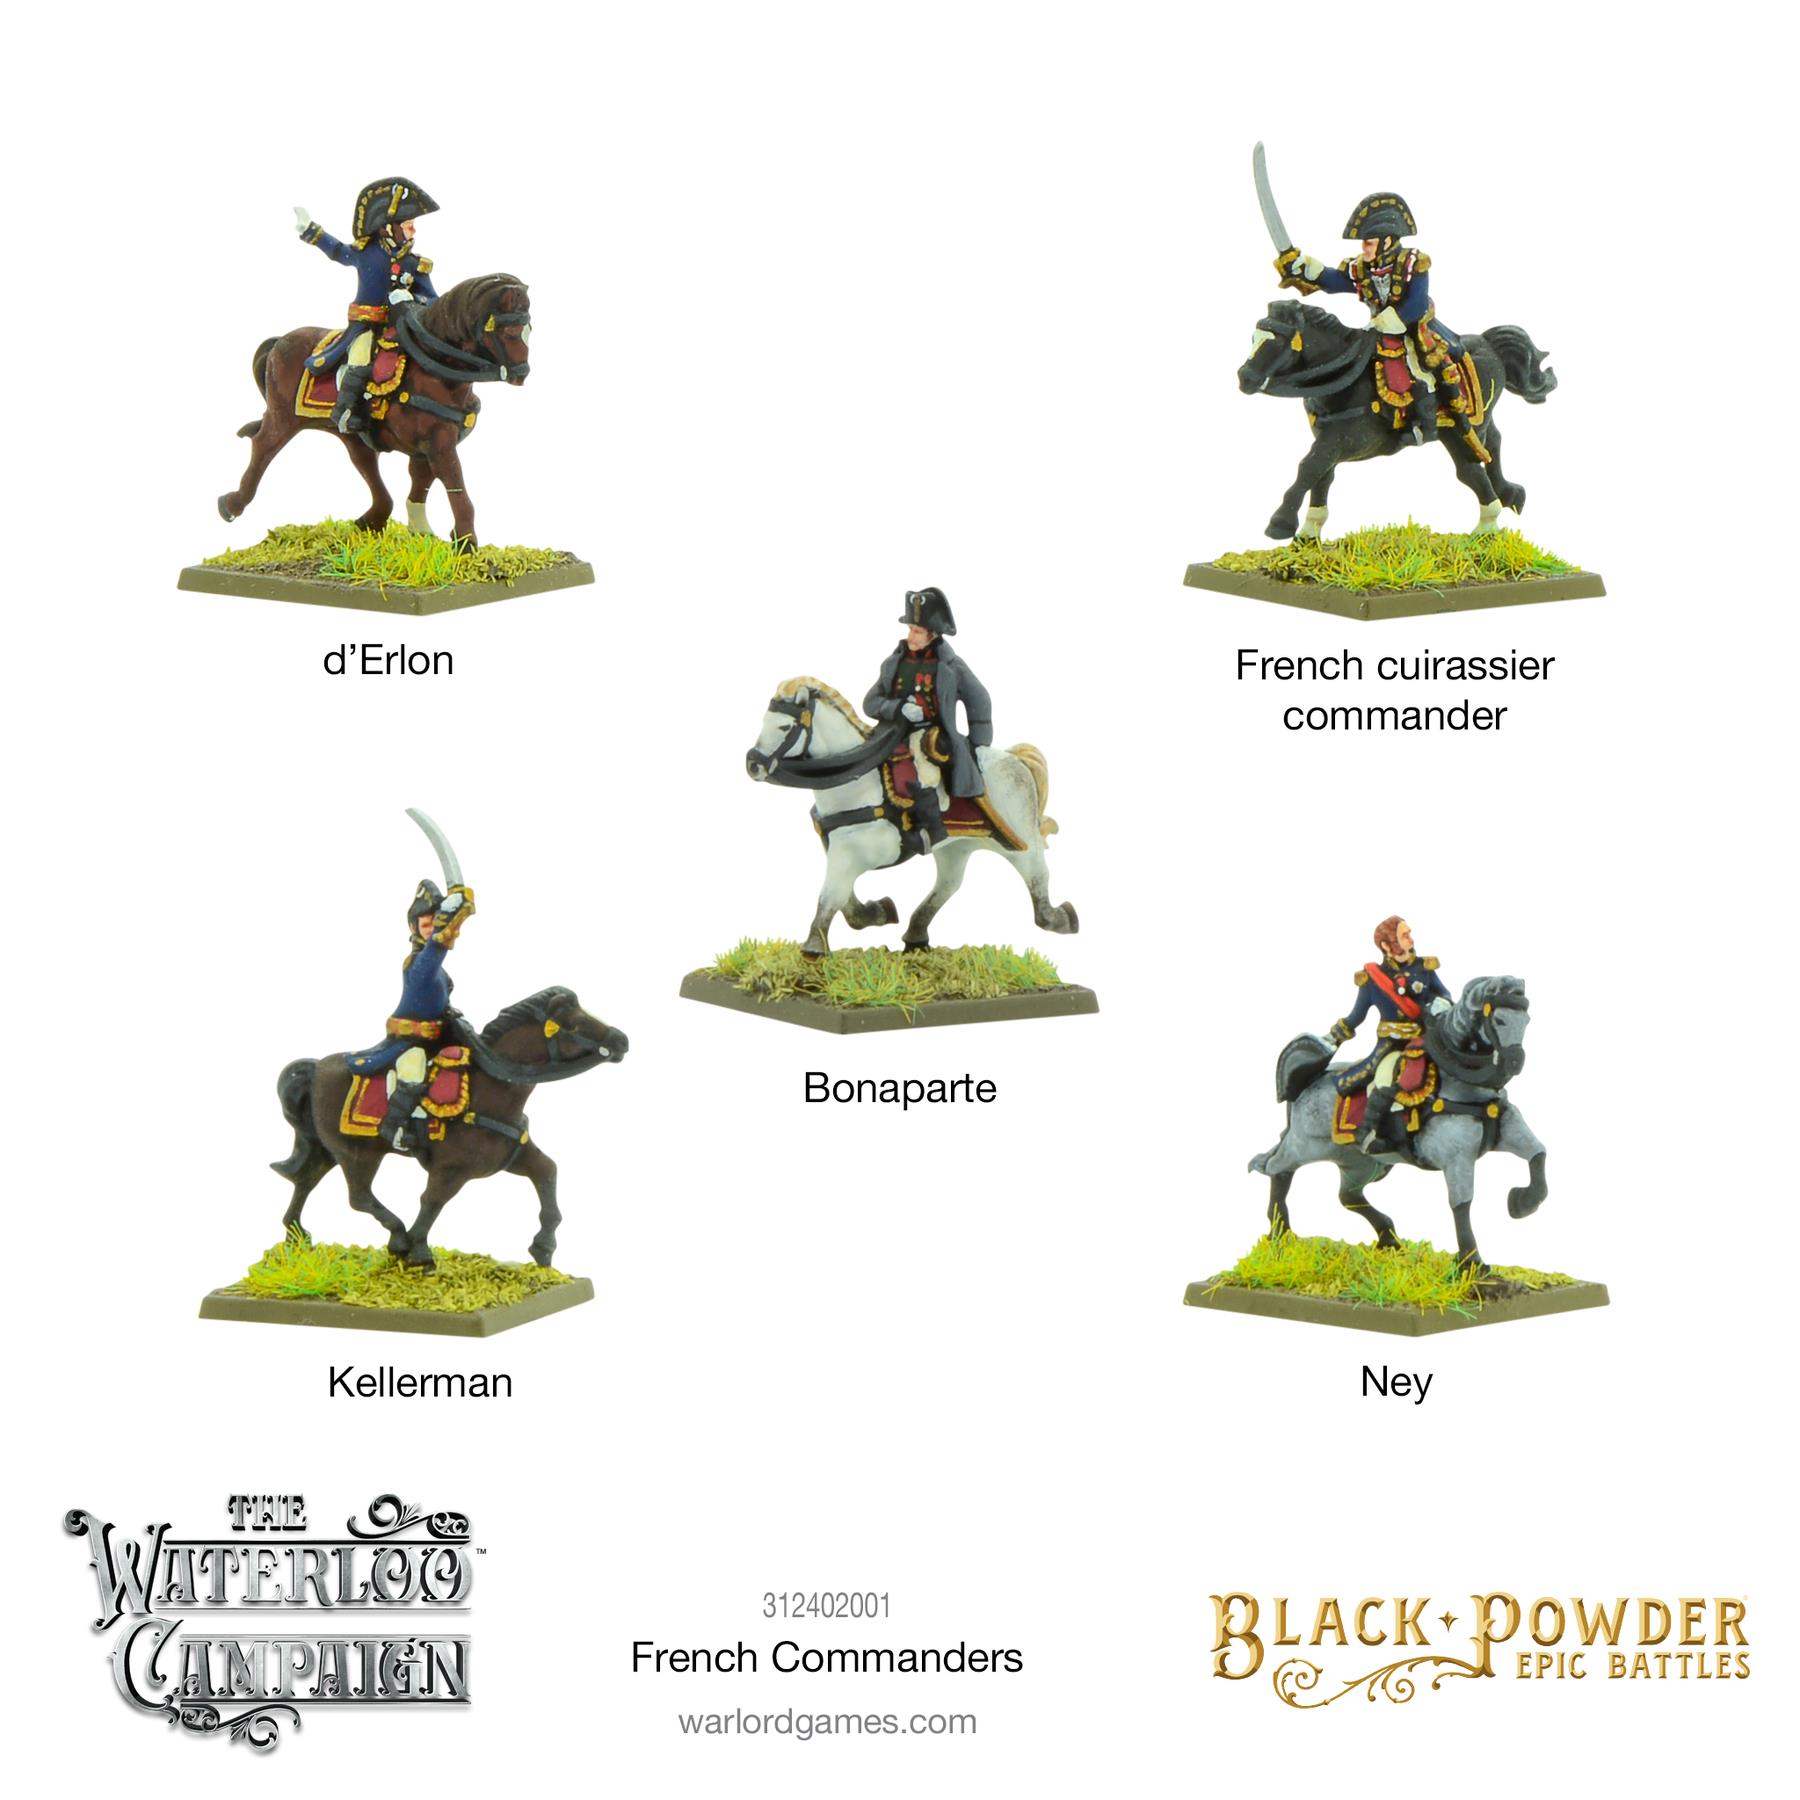 Black Powder Epic Battles - American Civil War Confederate Cavalry